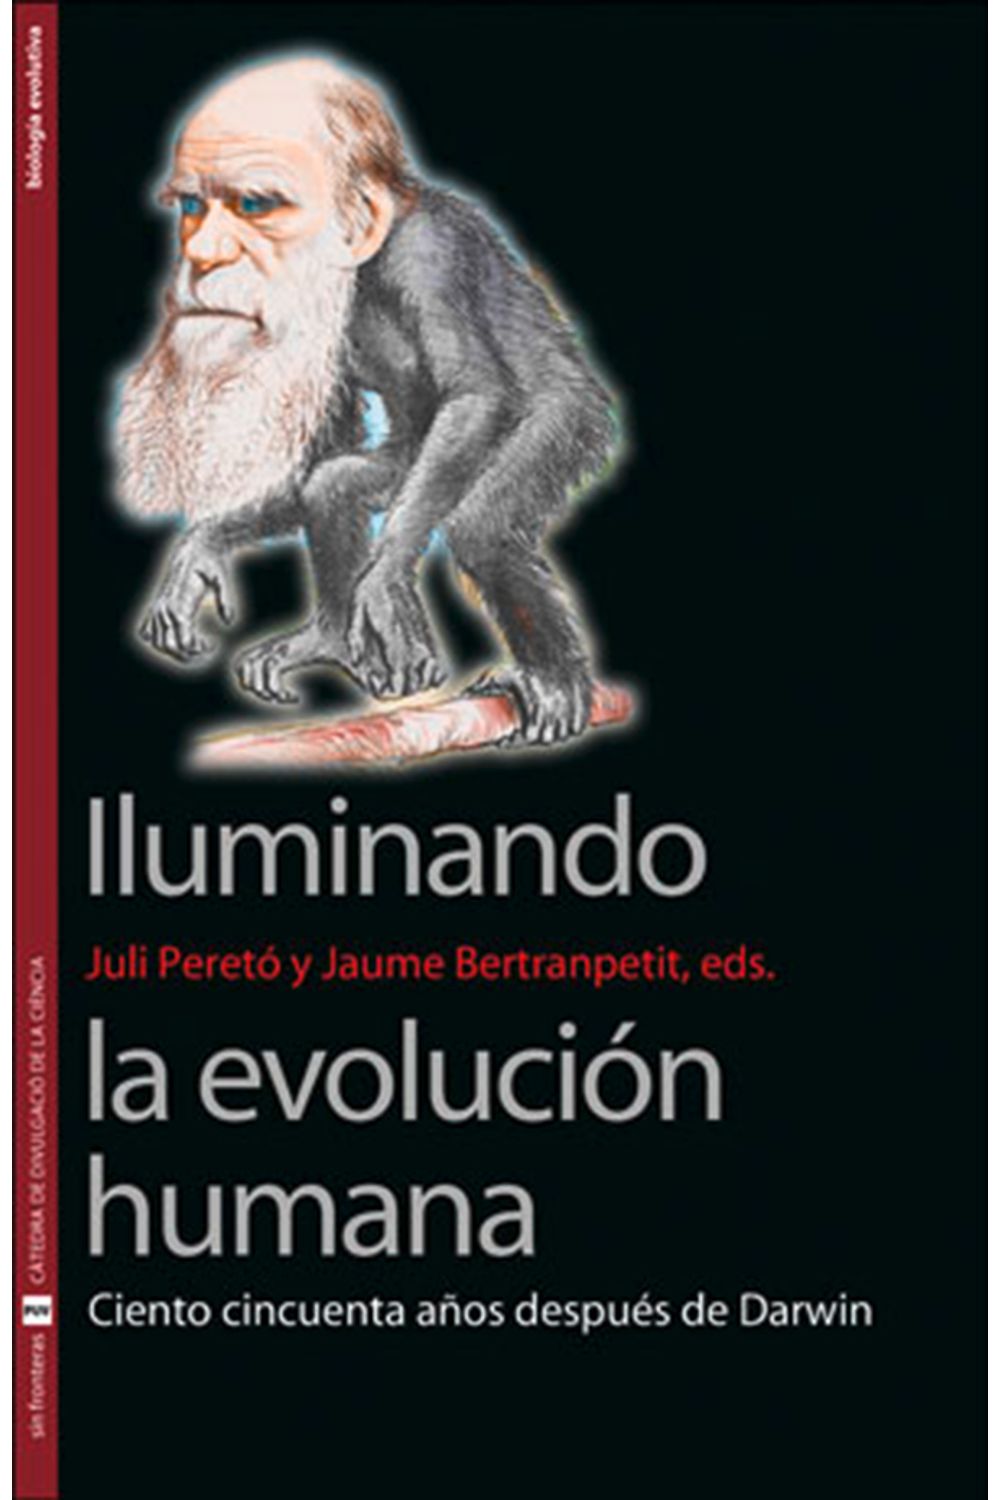 bm-iluminando-la-evolucion-humana-publicacions-de-la-universitat-de-valencia-9788491348696